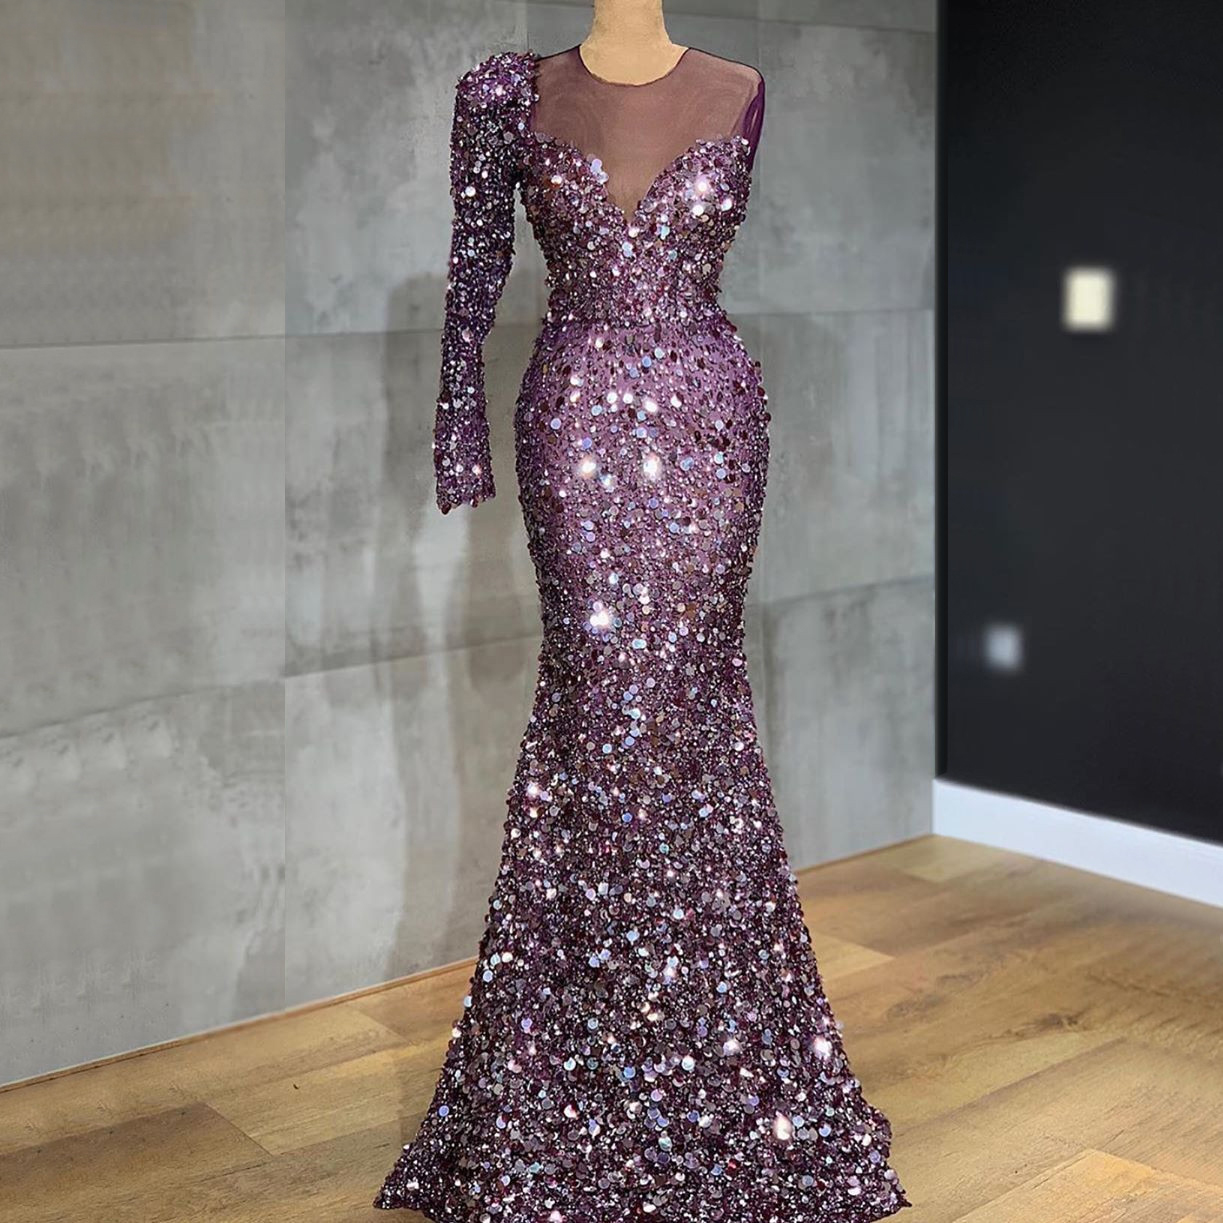 Real Prom Dress, Sexy Prom Dress, Purple Prom Dress, Bling Bling Evening Dress, Party Dresses, 2021 Formal Dress, Custom Make Prom Dress,